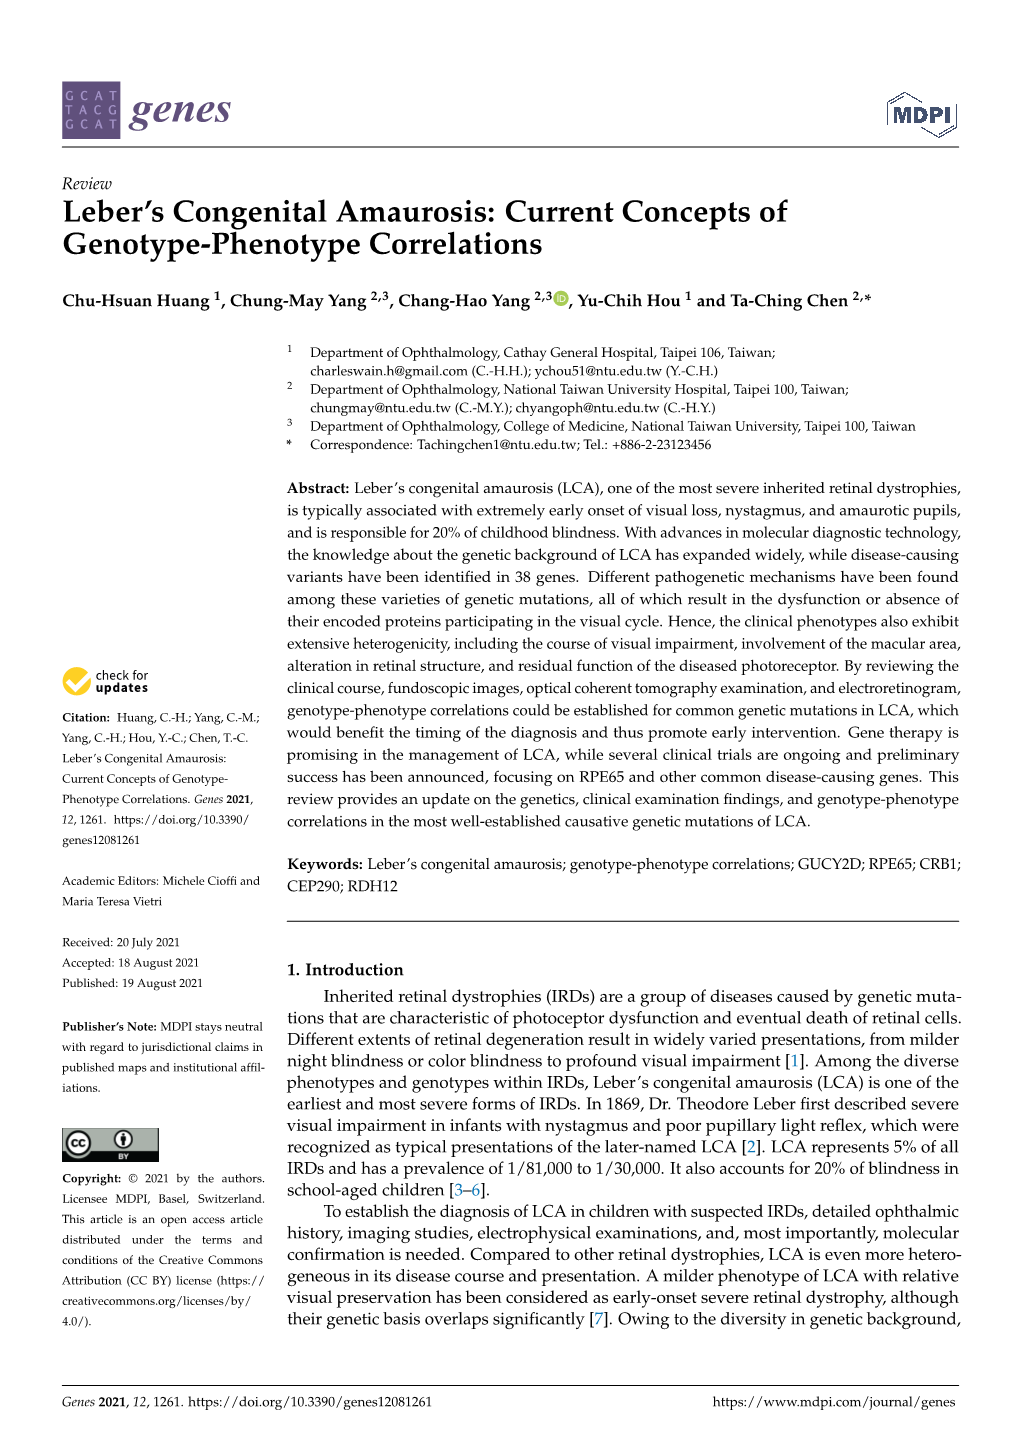 Current Concepts of Genotype-Phenotype Correlations